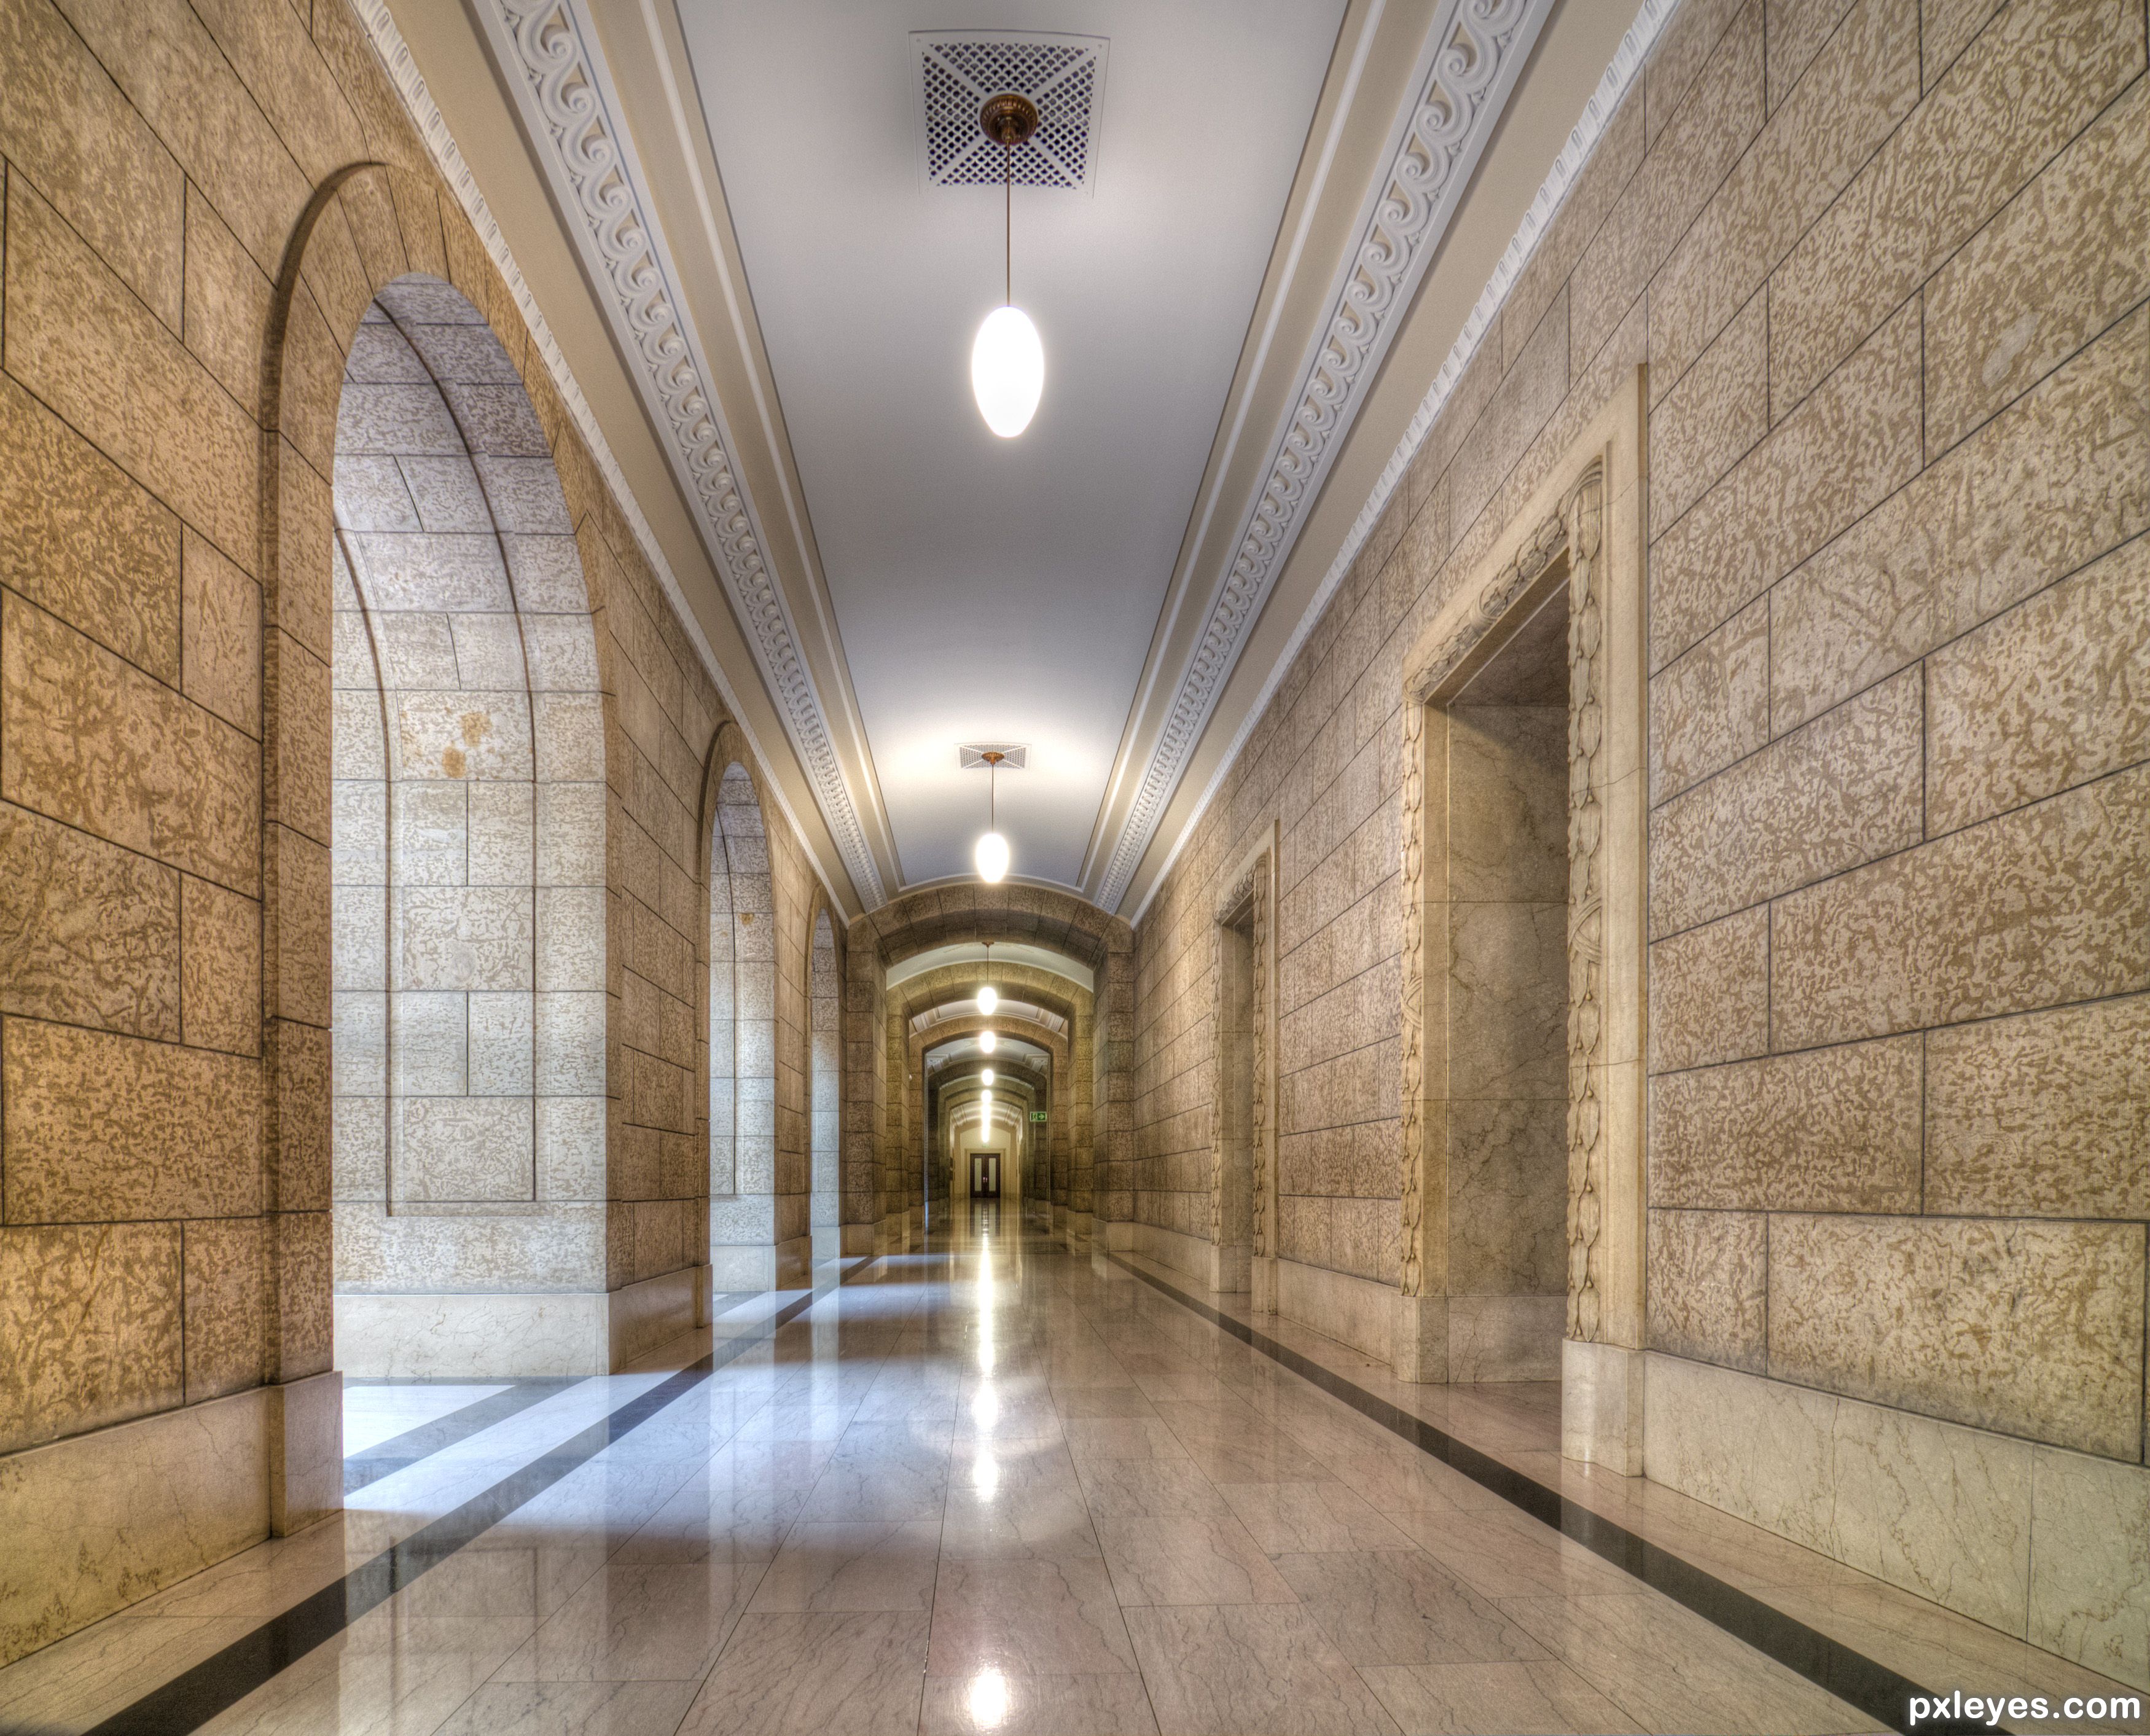 Legislature Building Corridor picture, by Alan2641 for: corridors ...